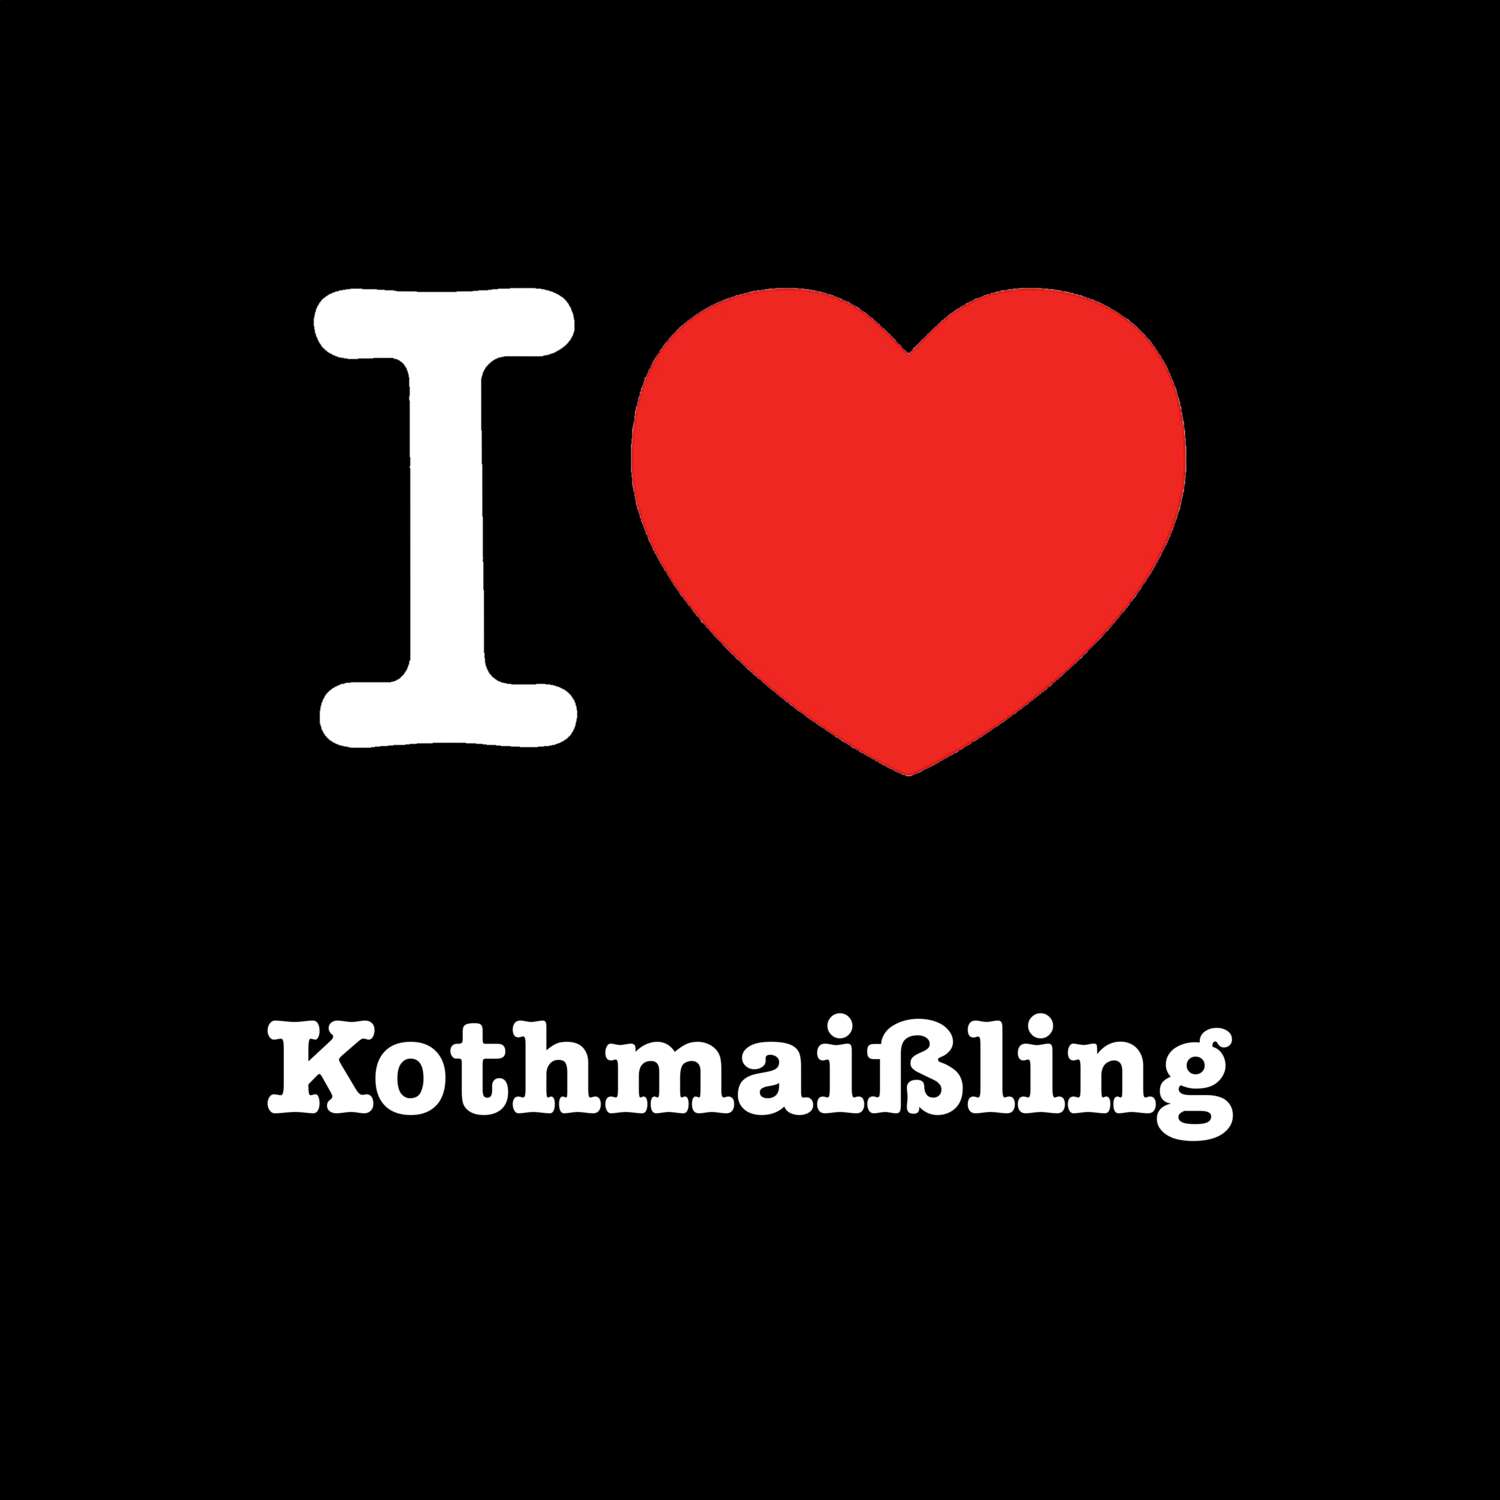 Kothmaißling T-Shirt »I love«